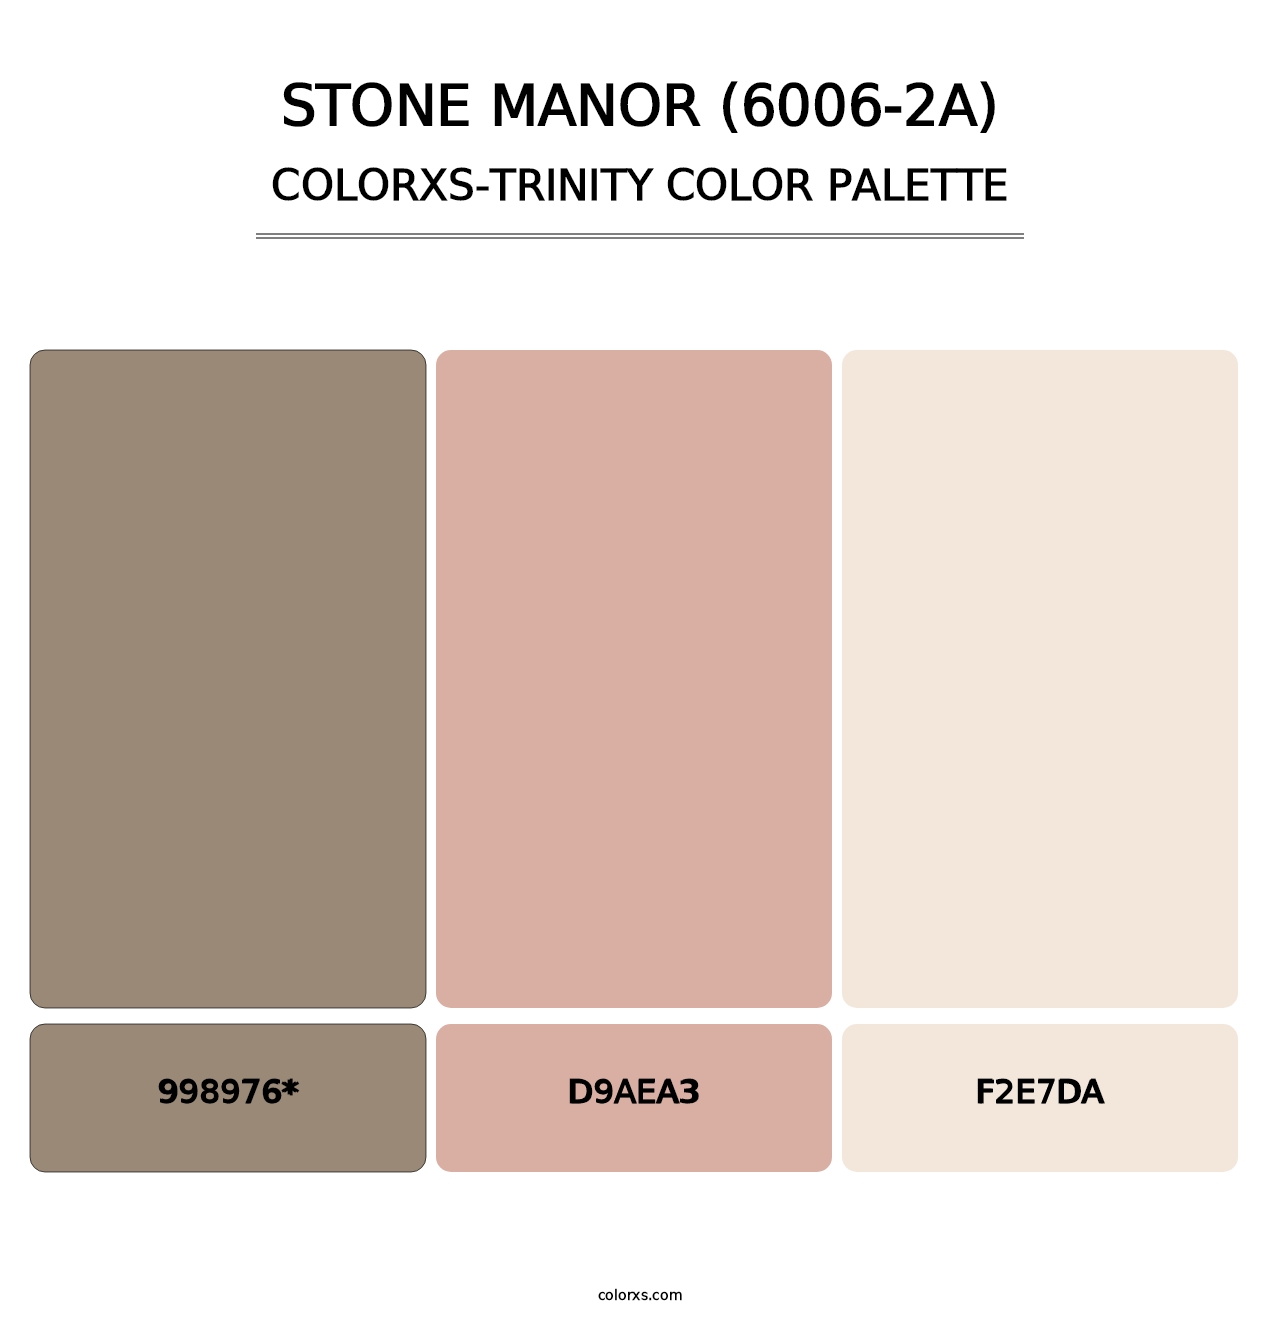 Stone Manor (6006-2A) - Colorxs Trinity Palette